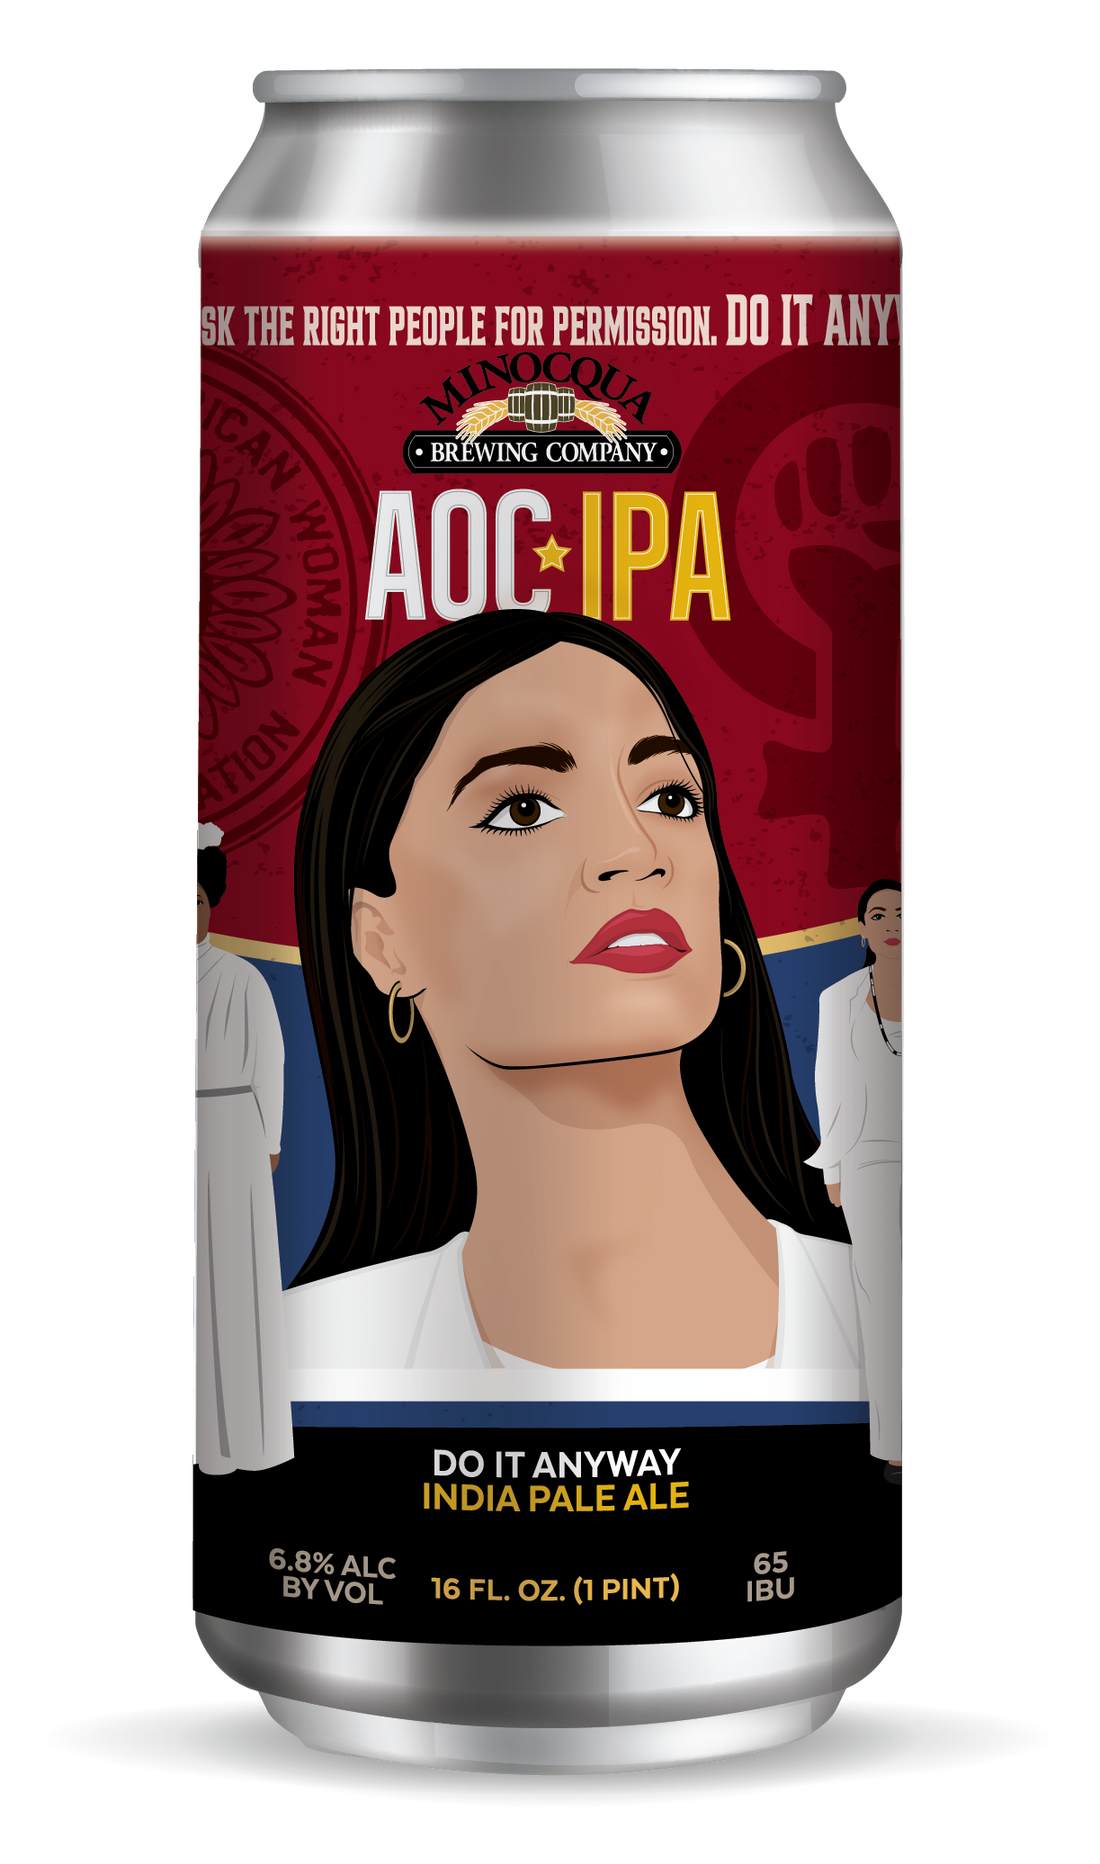 Introducing "AOC IPA:  Do It Anyway."